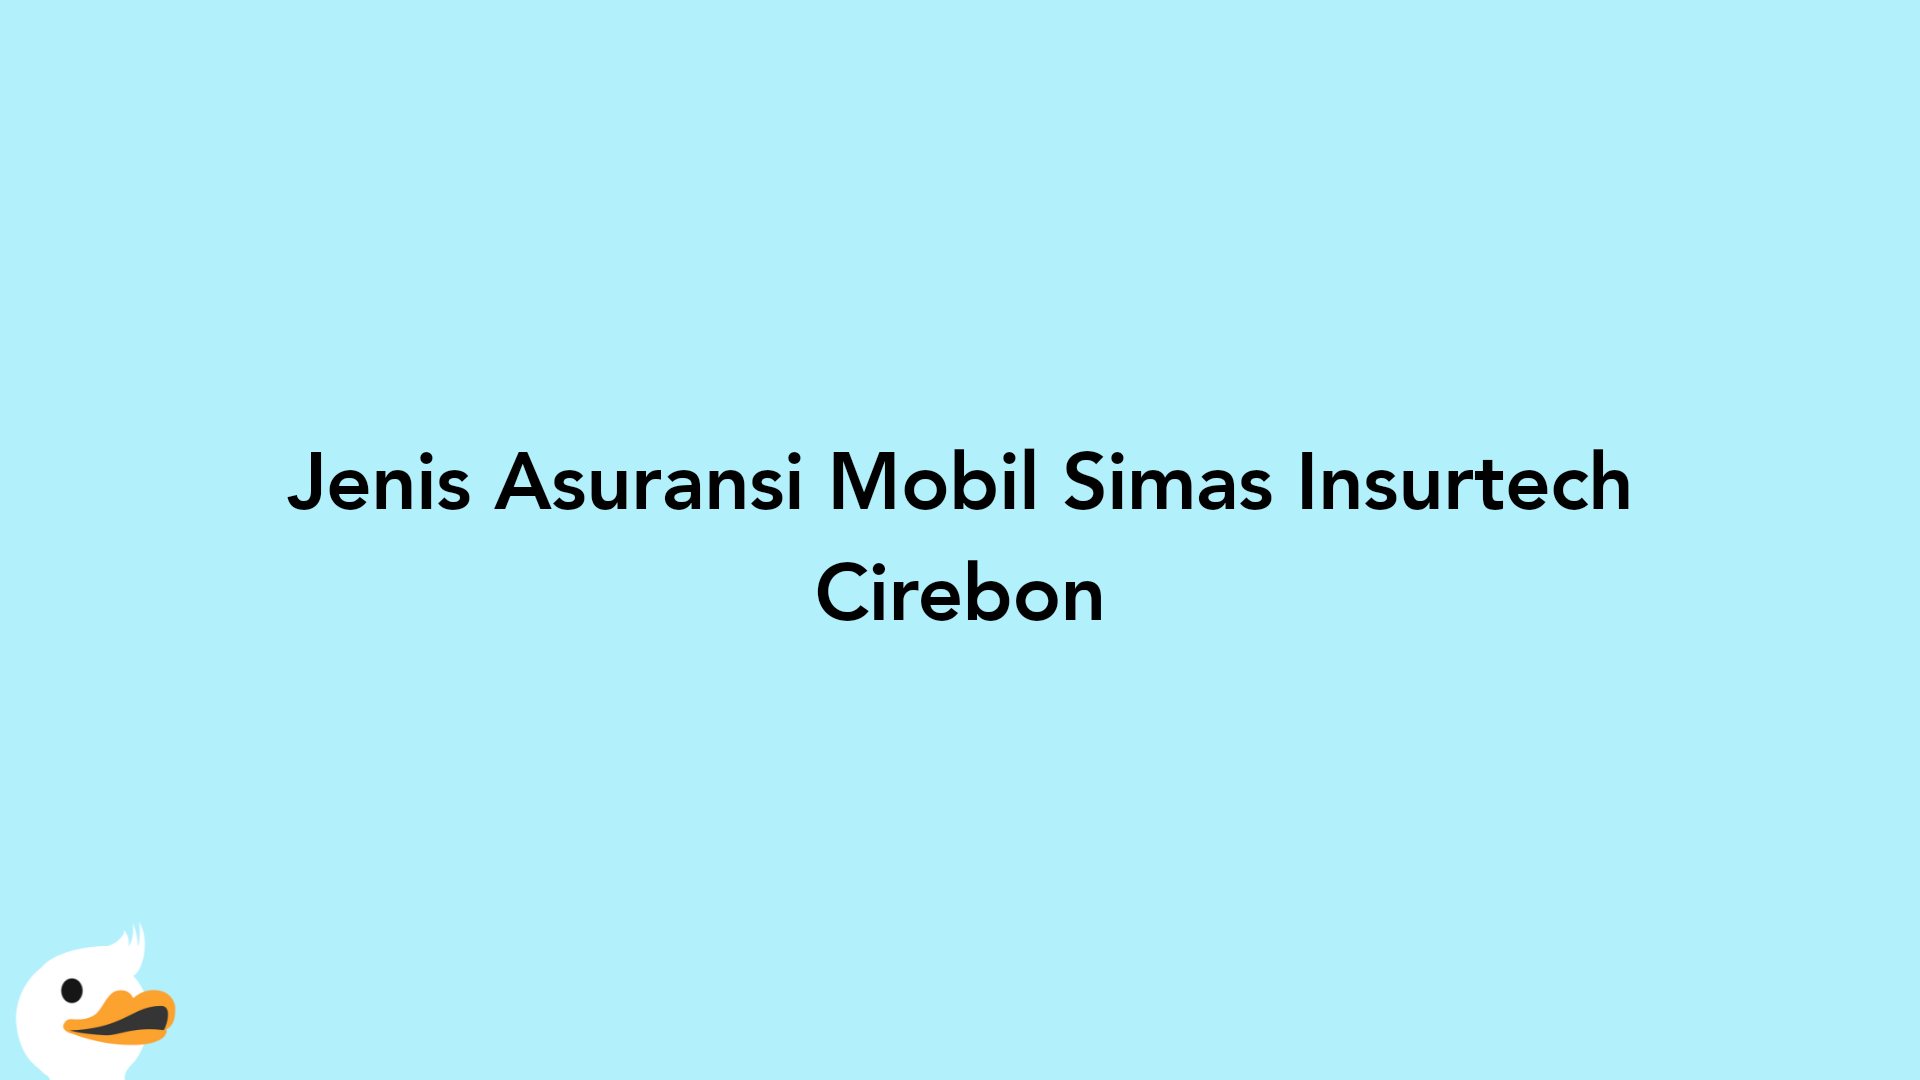 Jenis Asuransi Mobil Simas Insurtech Cirebon